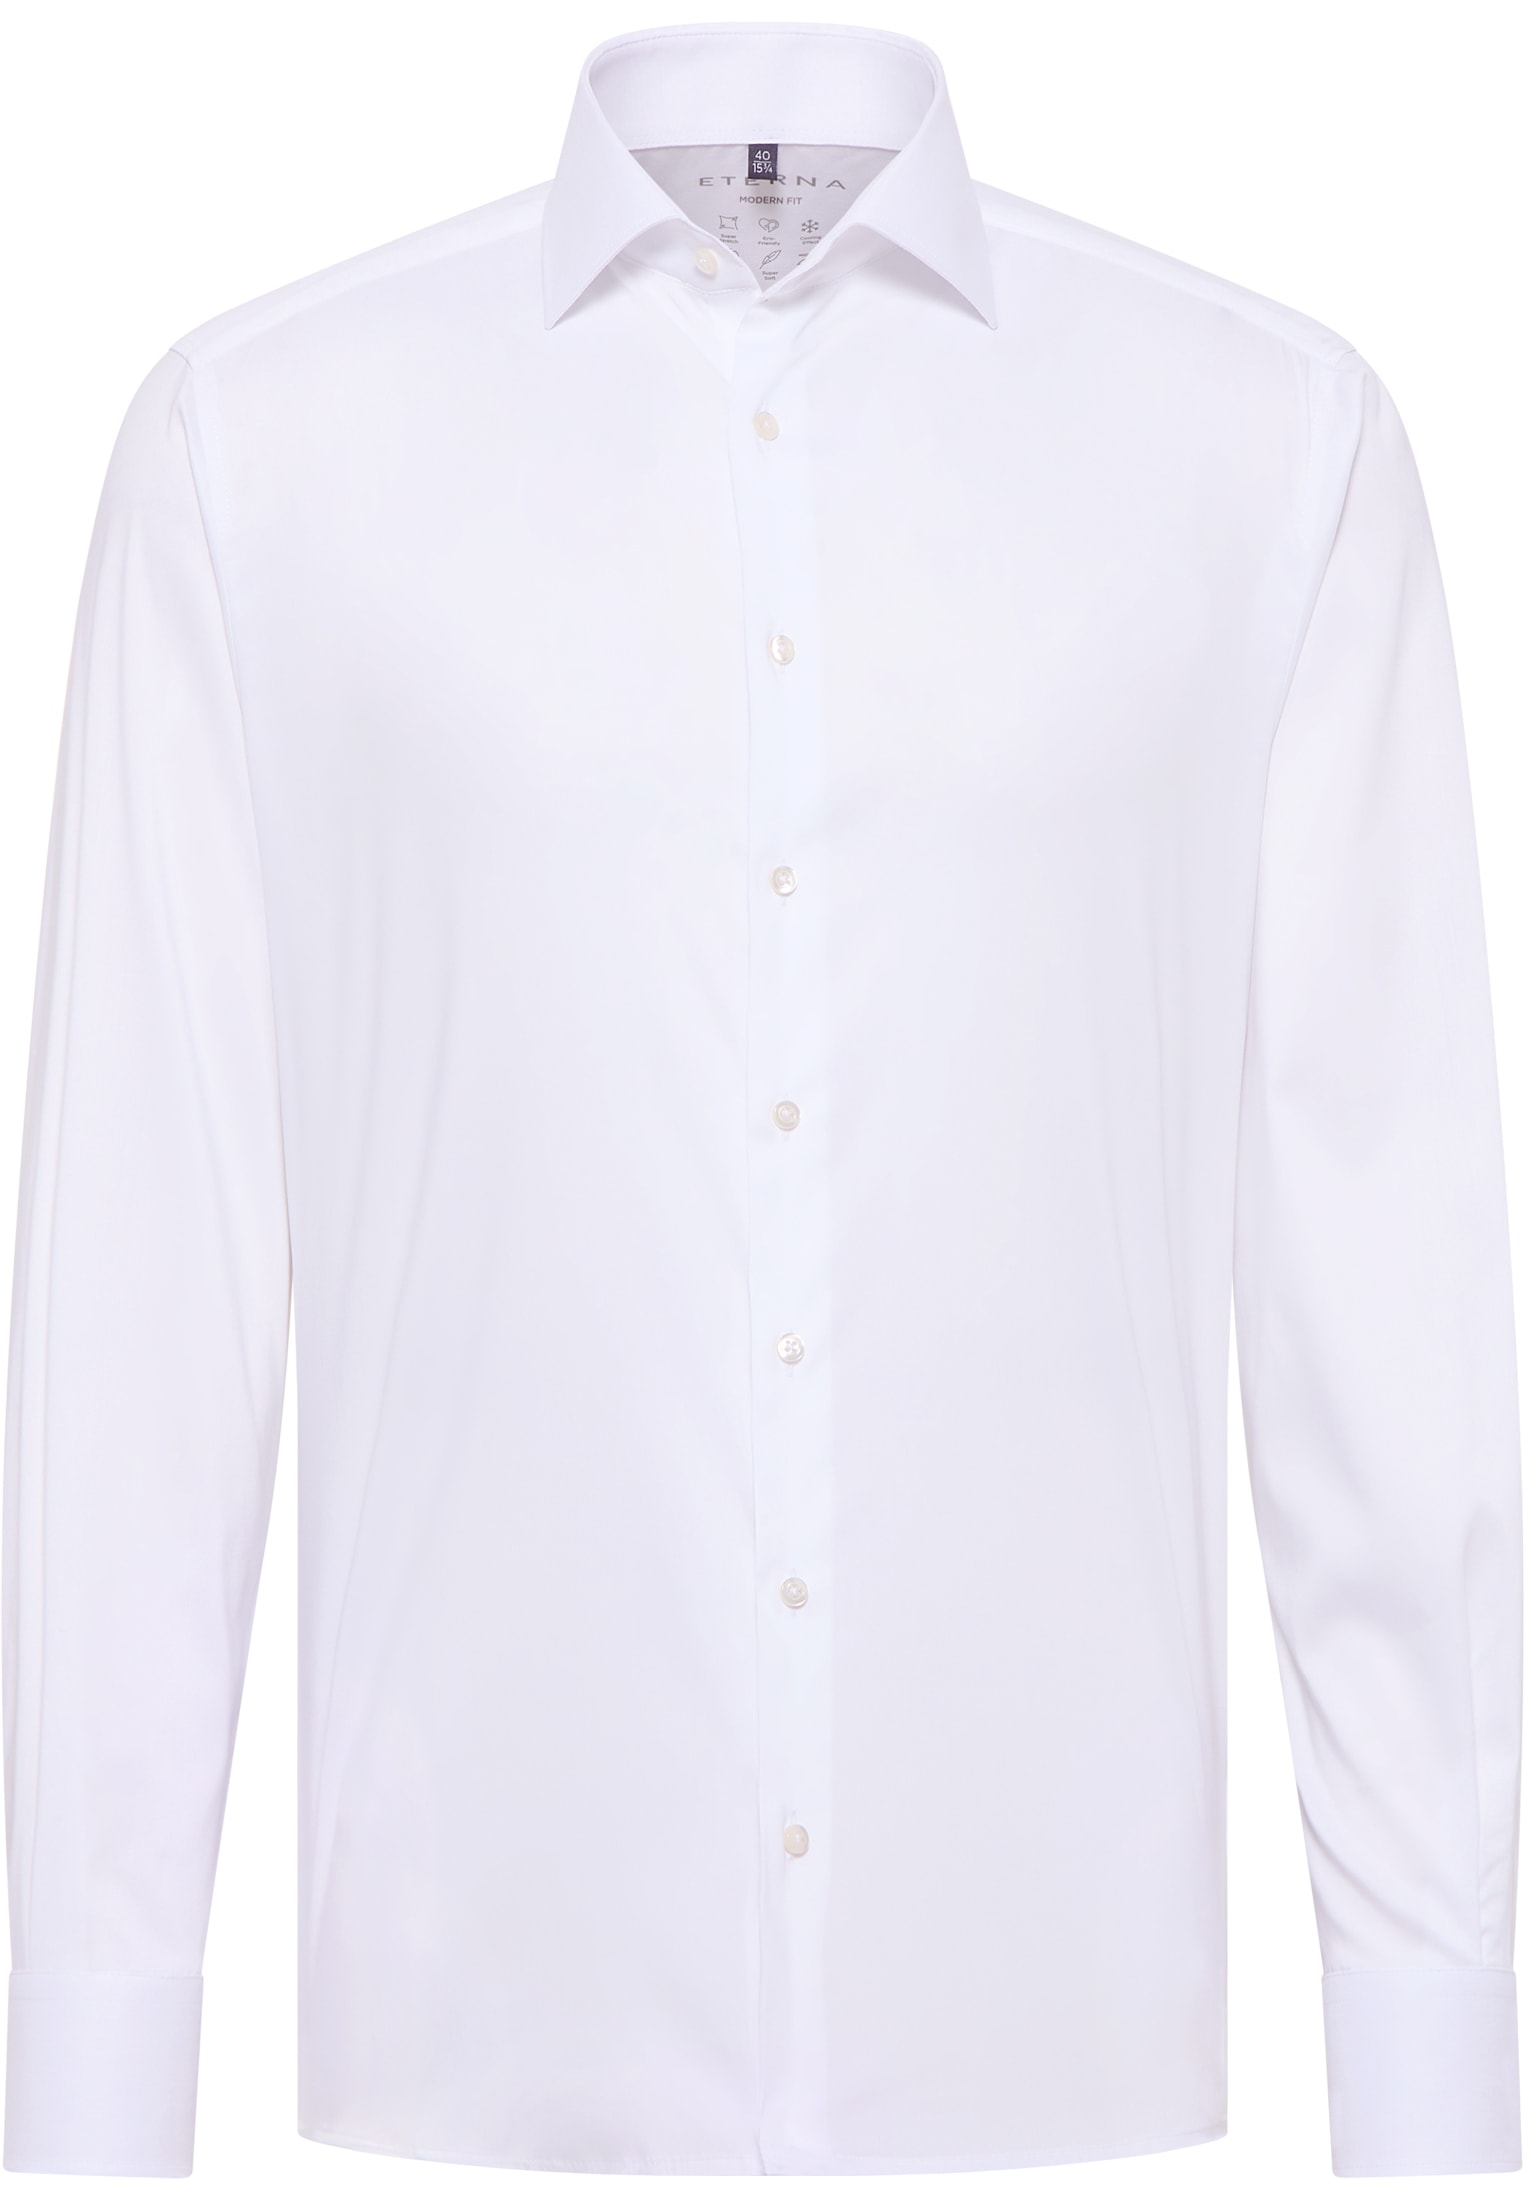 MODERN FIT Performance Shirt in weiß unifarben | weiß | 39 | Langarm |  1SH02224-00-01-39-1/1